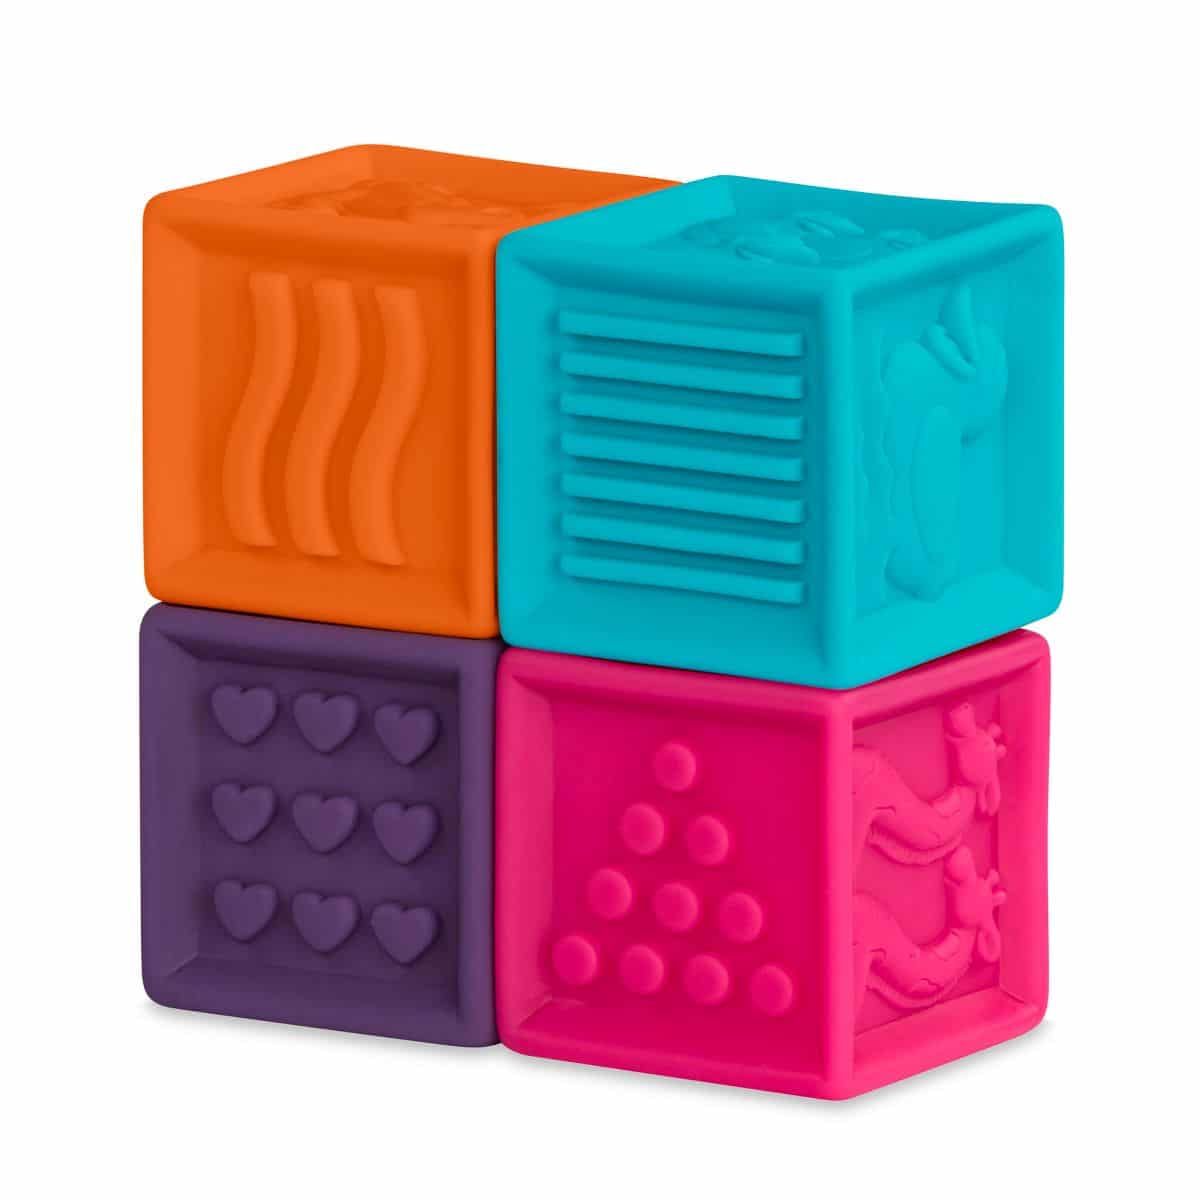 colourful building blocks